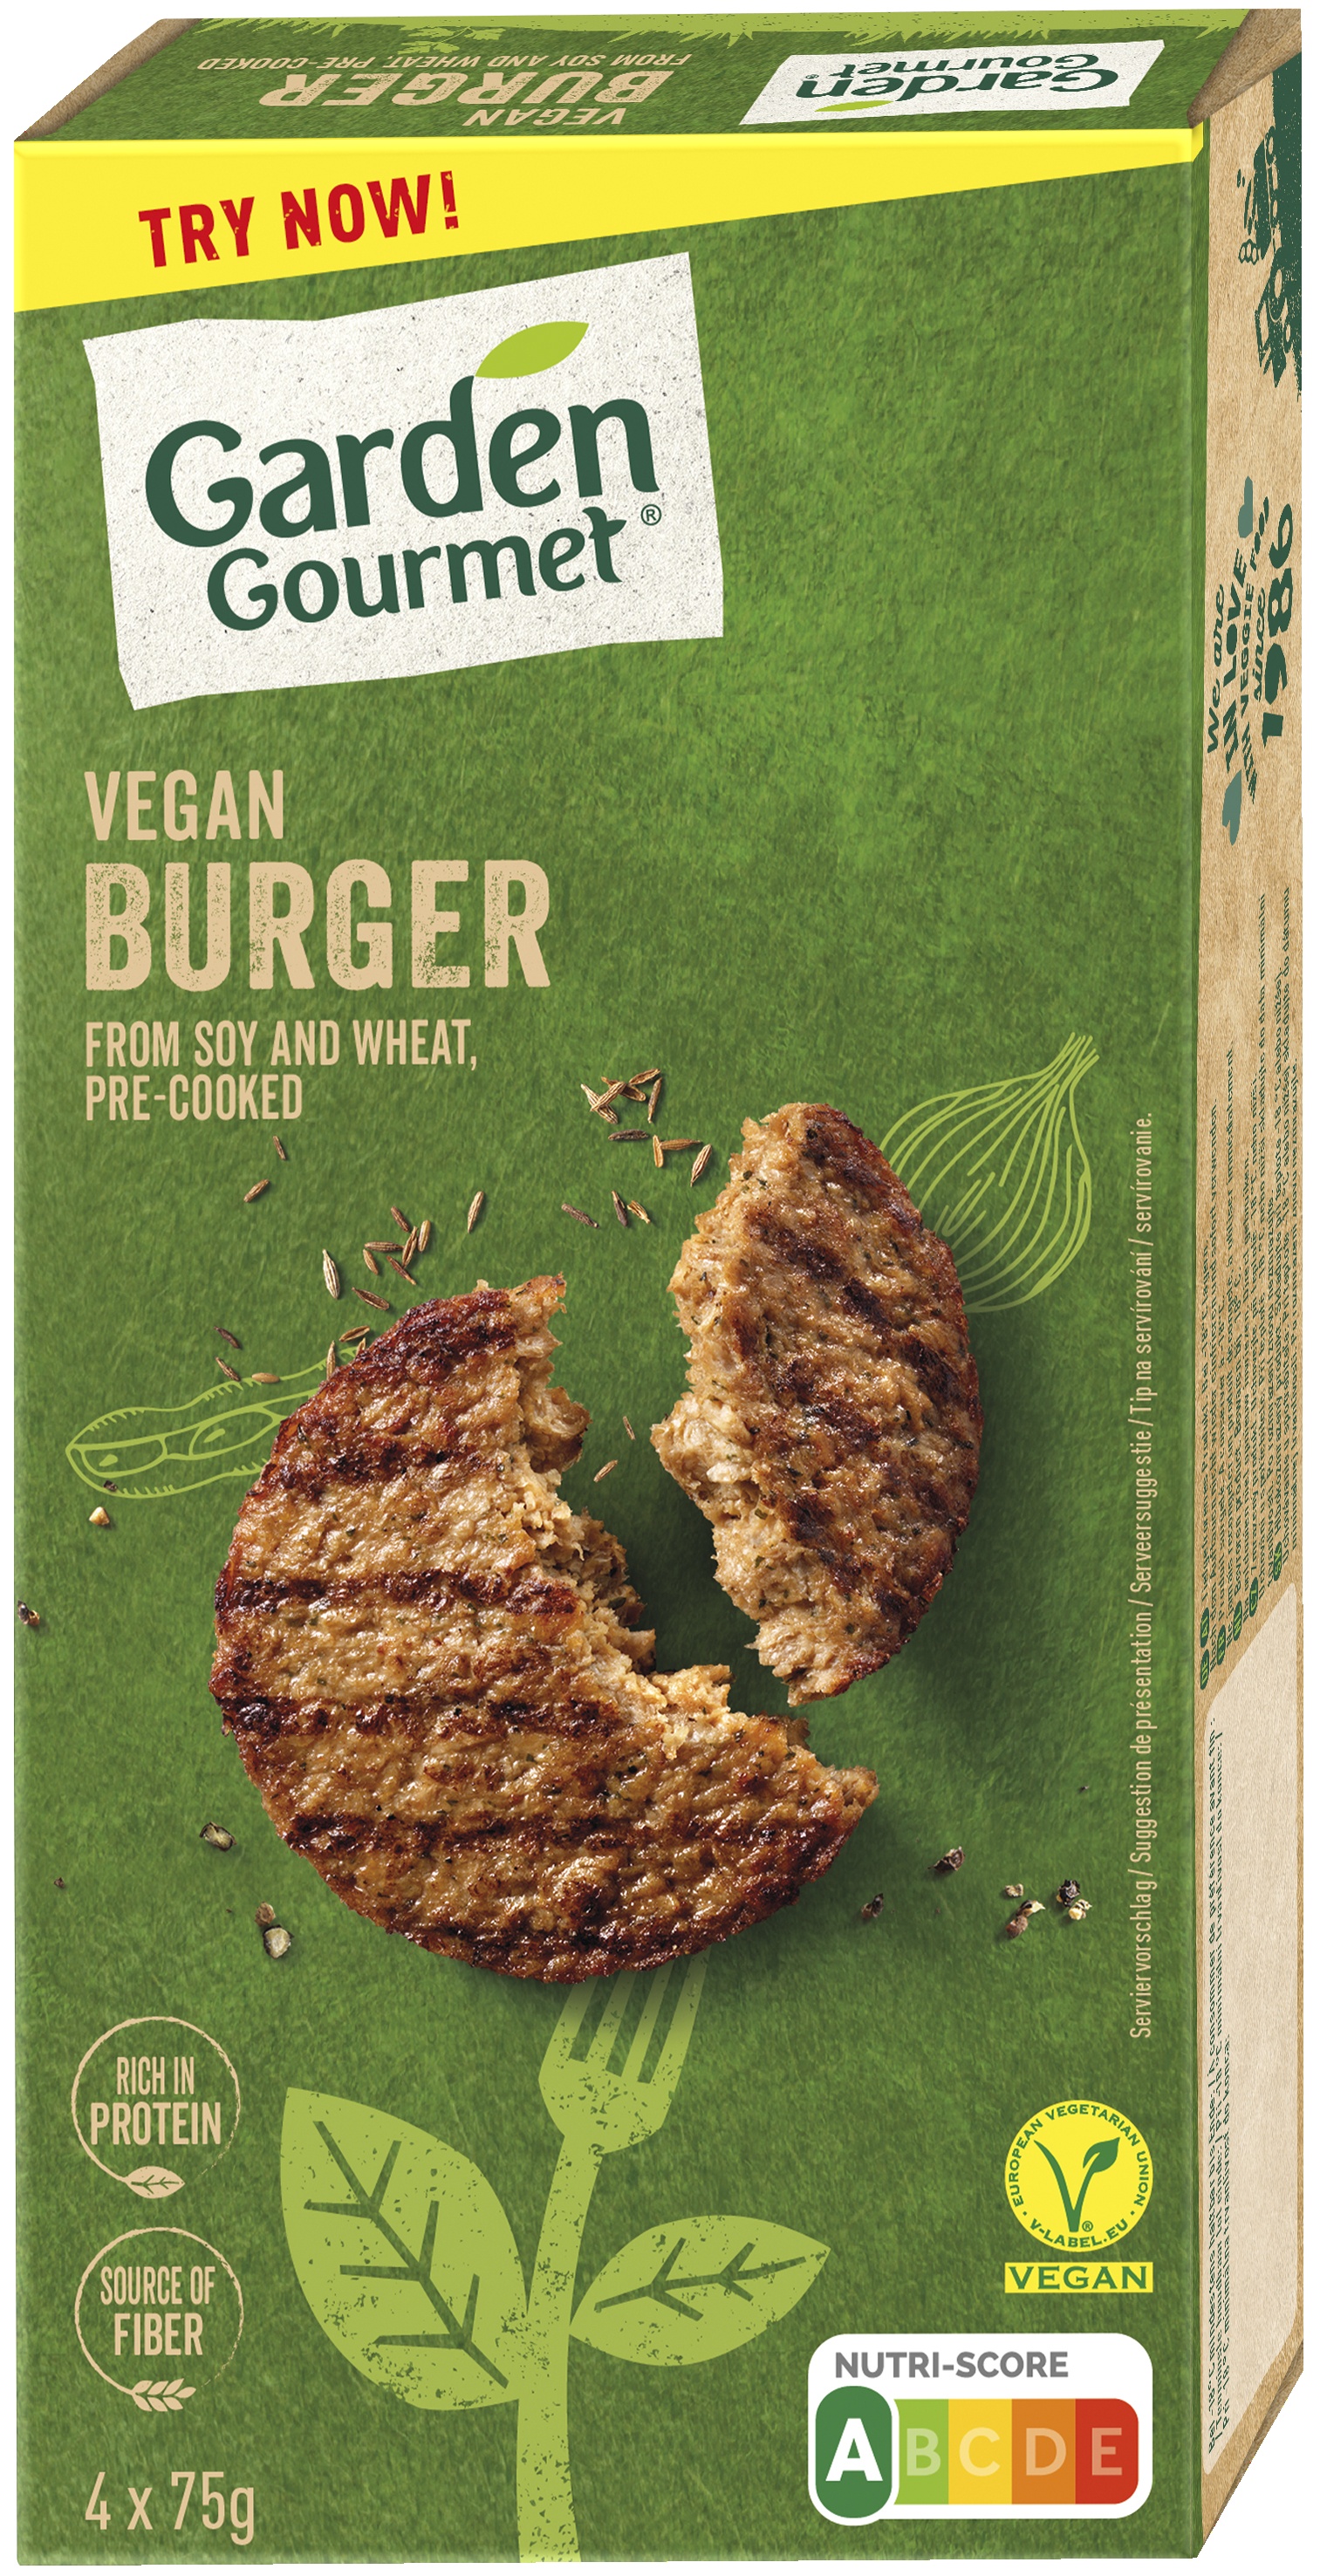 Slika za Burger vegan Garden gourmet 300g